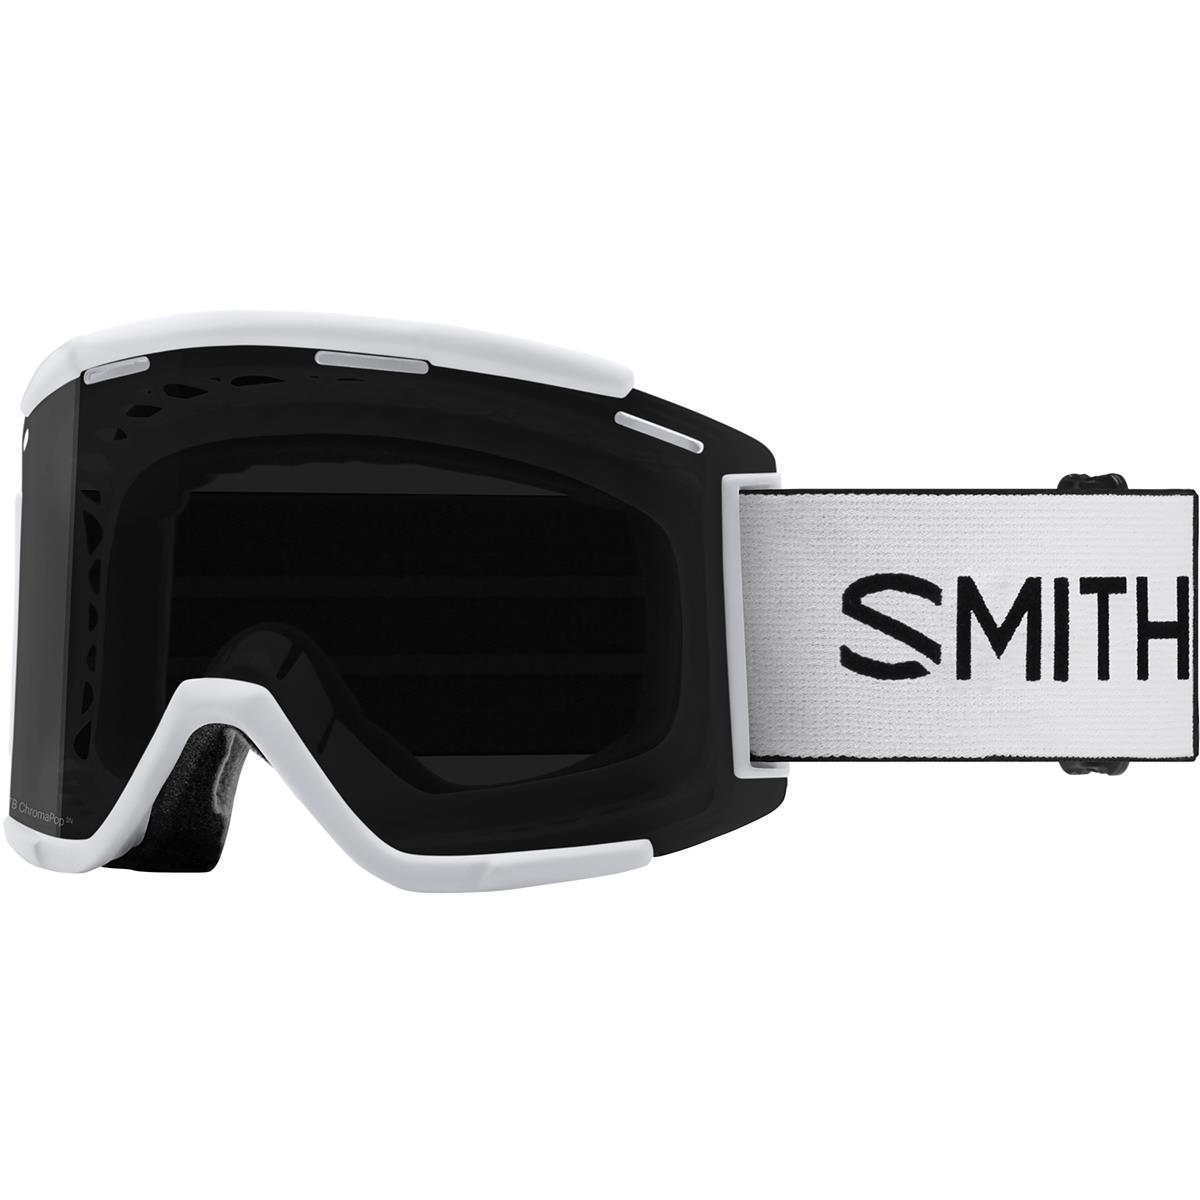 Smith Masque VTT Squad MTB XL White - Chromapop Sun Black